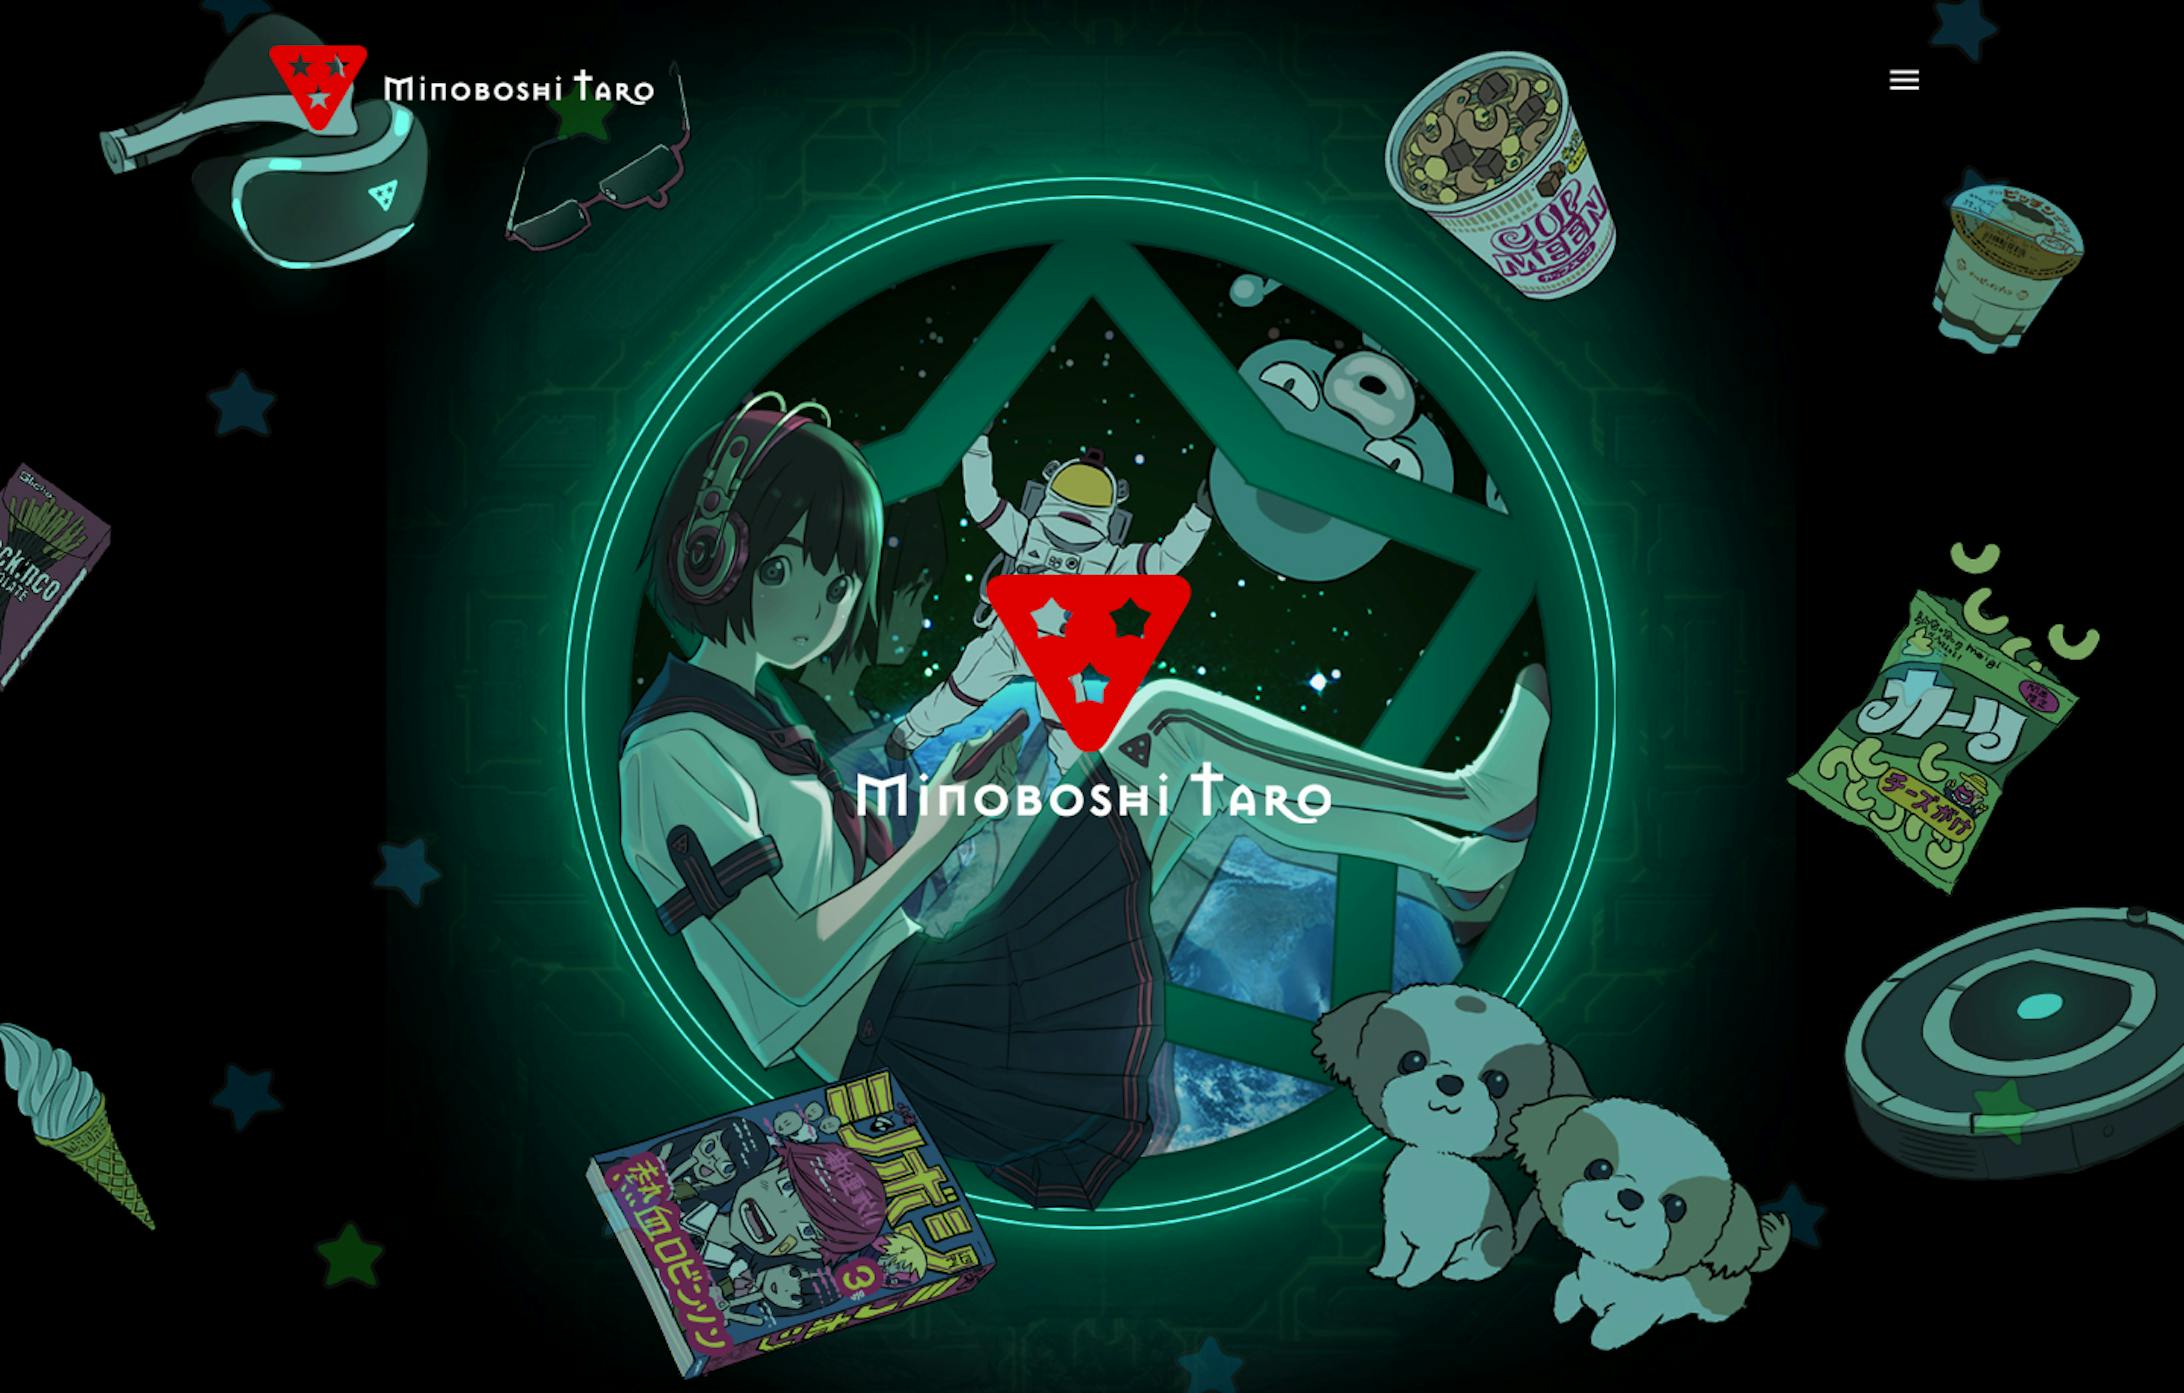 Minoboshi Taro's official website-1